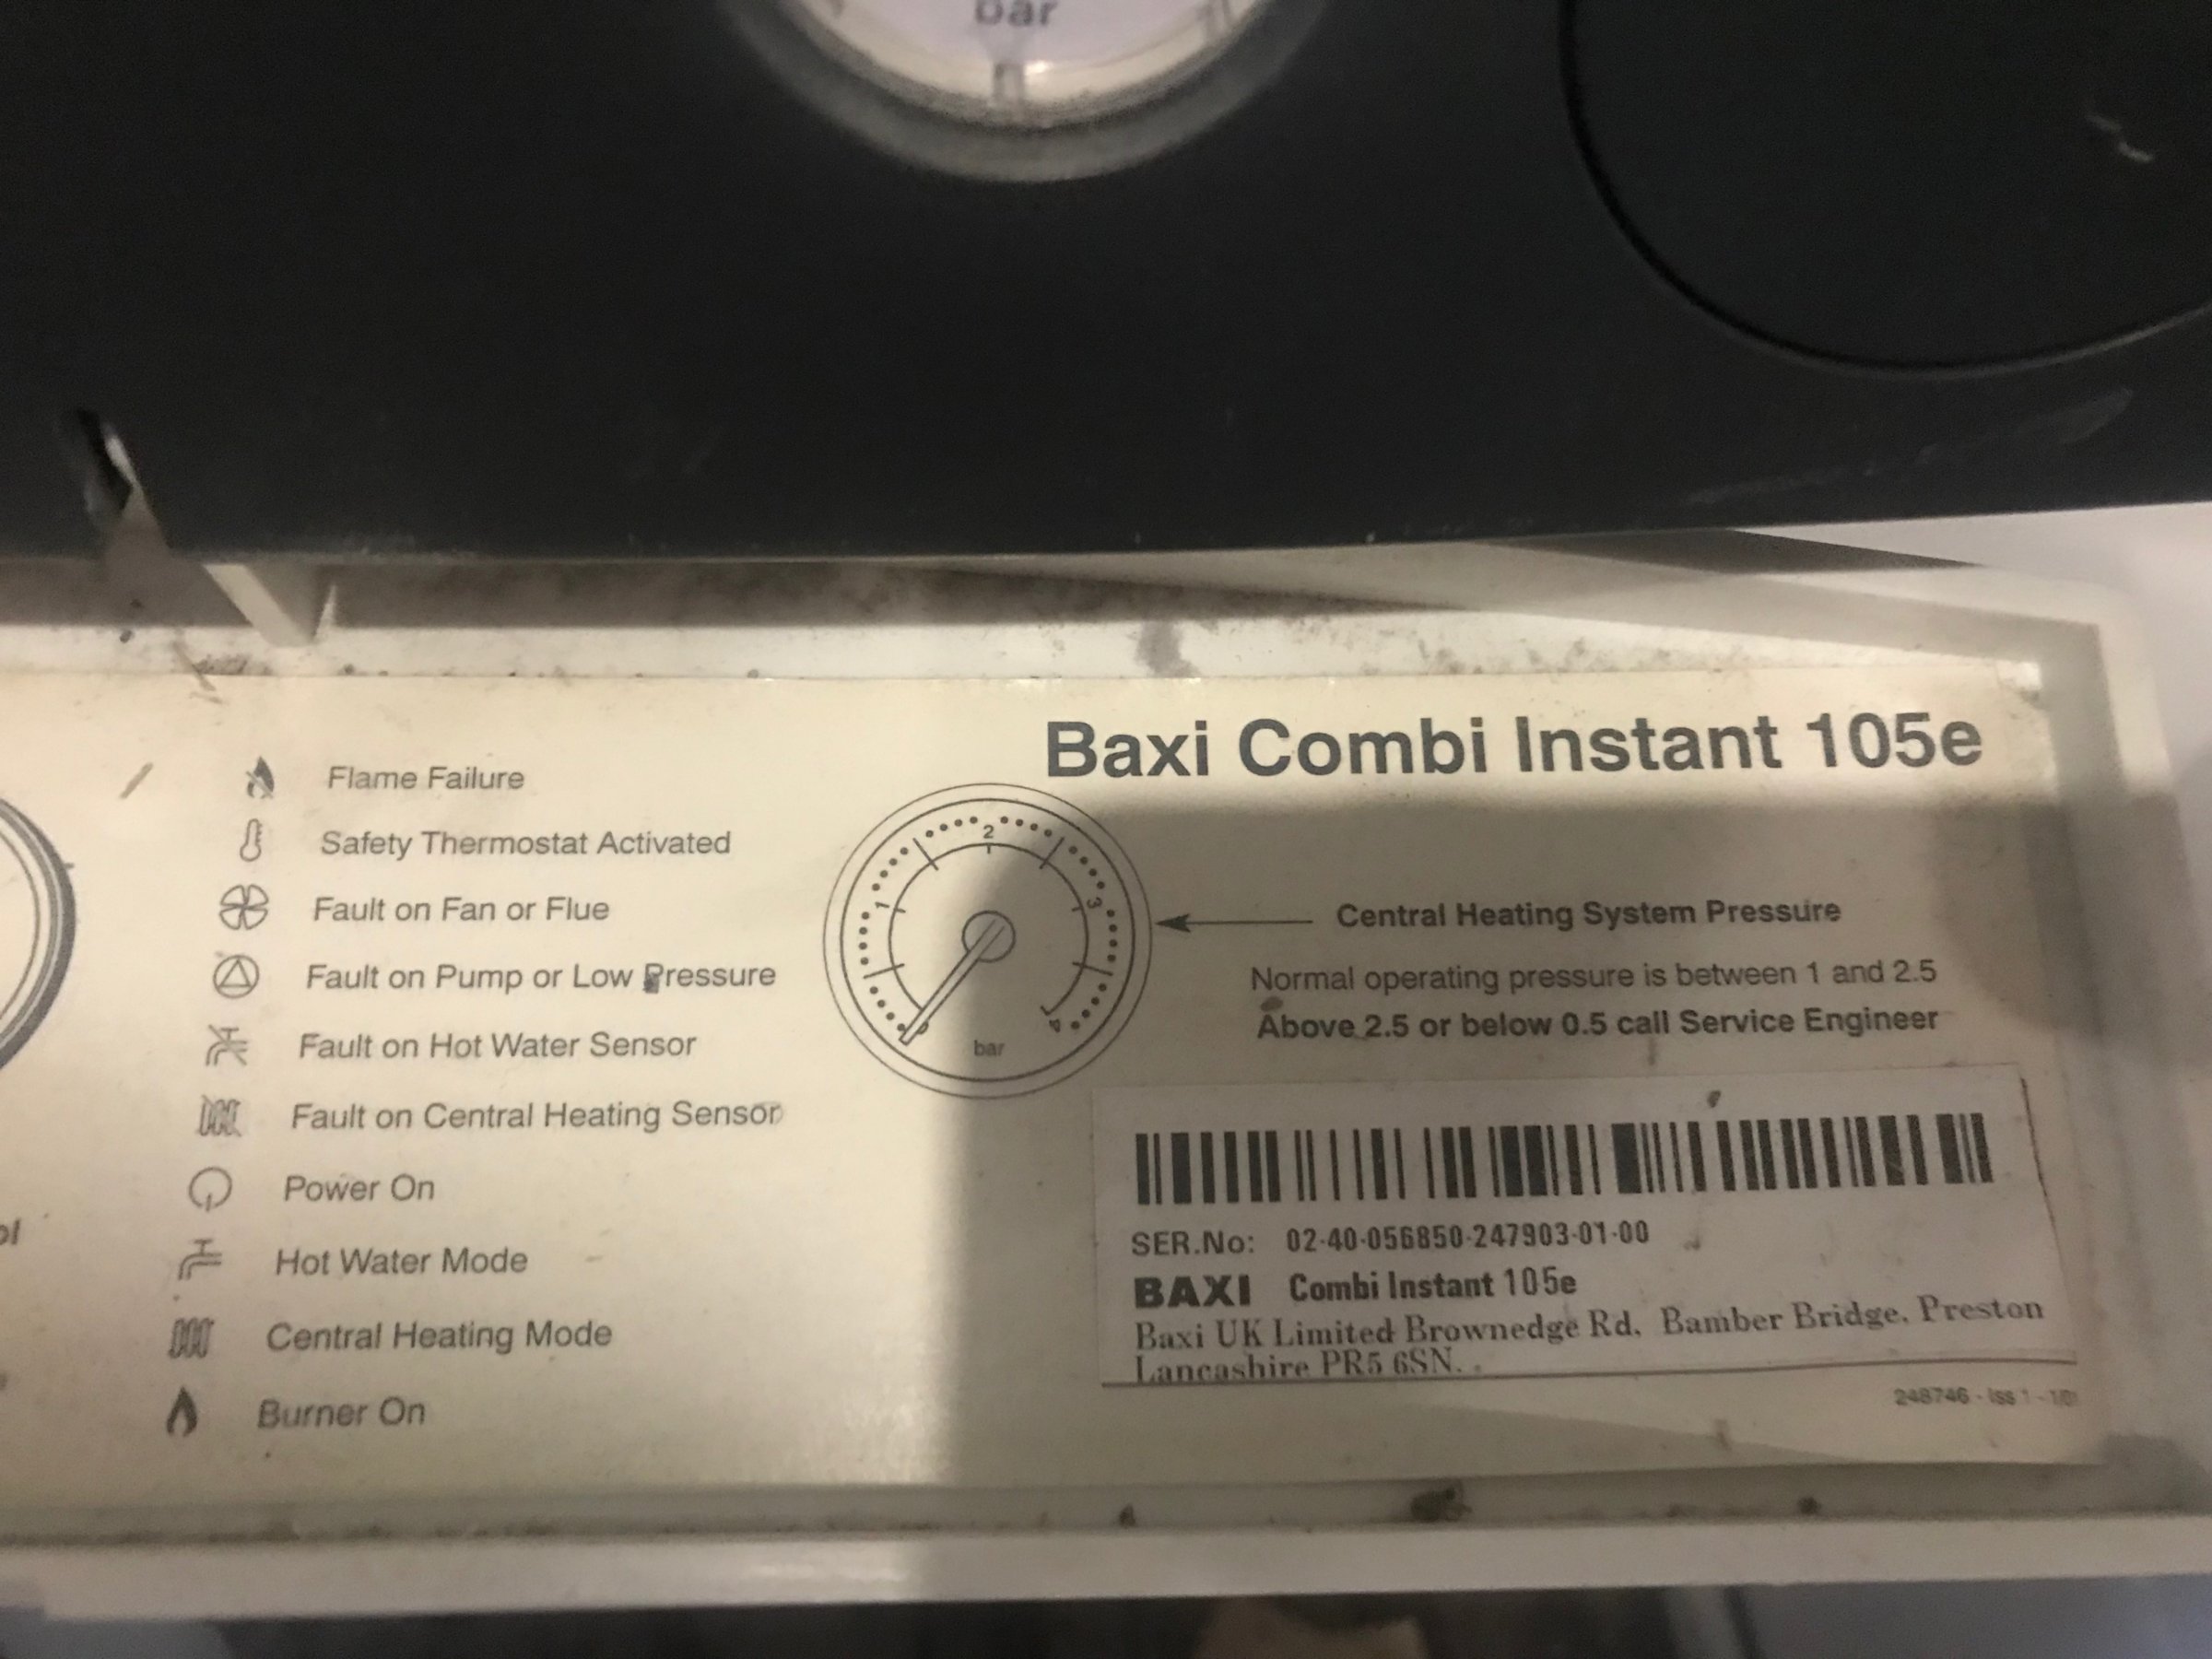 Baxi Boiler